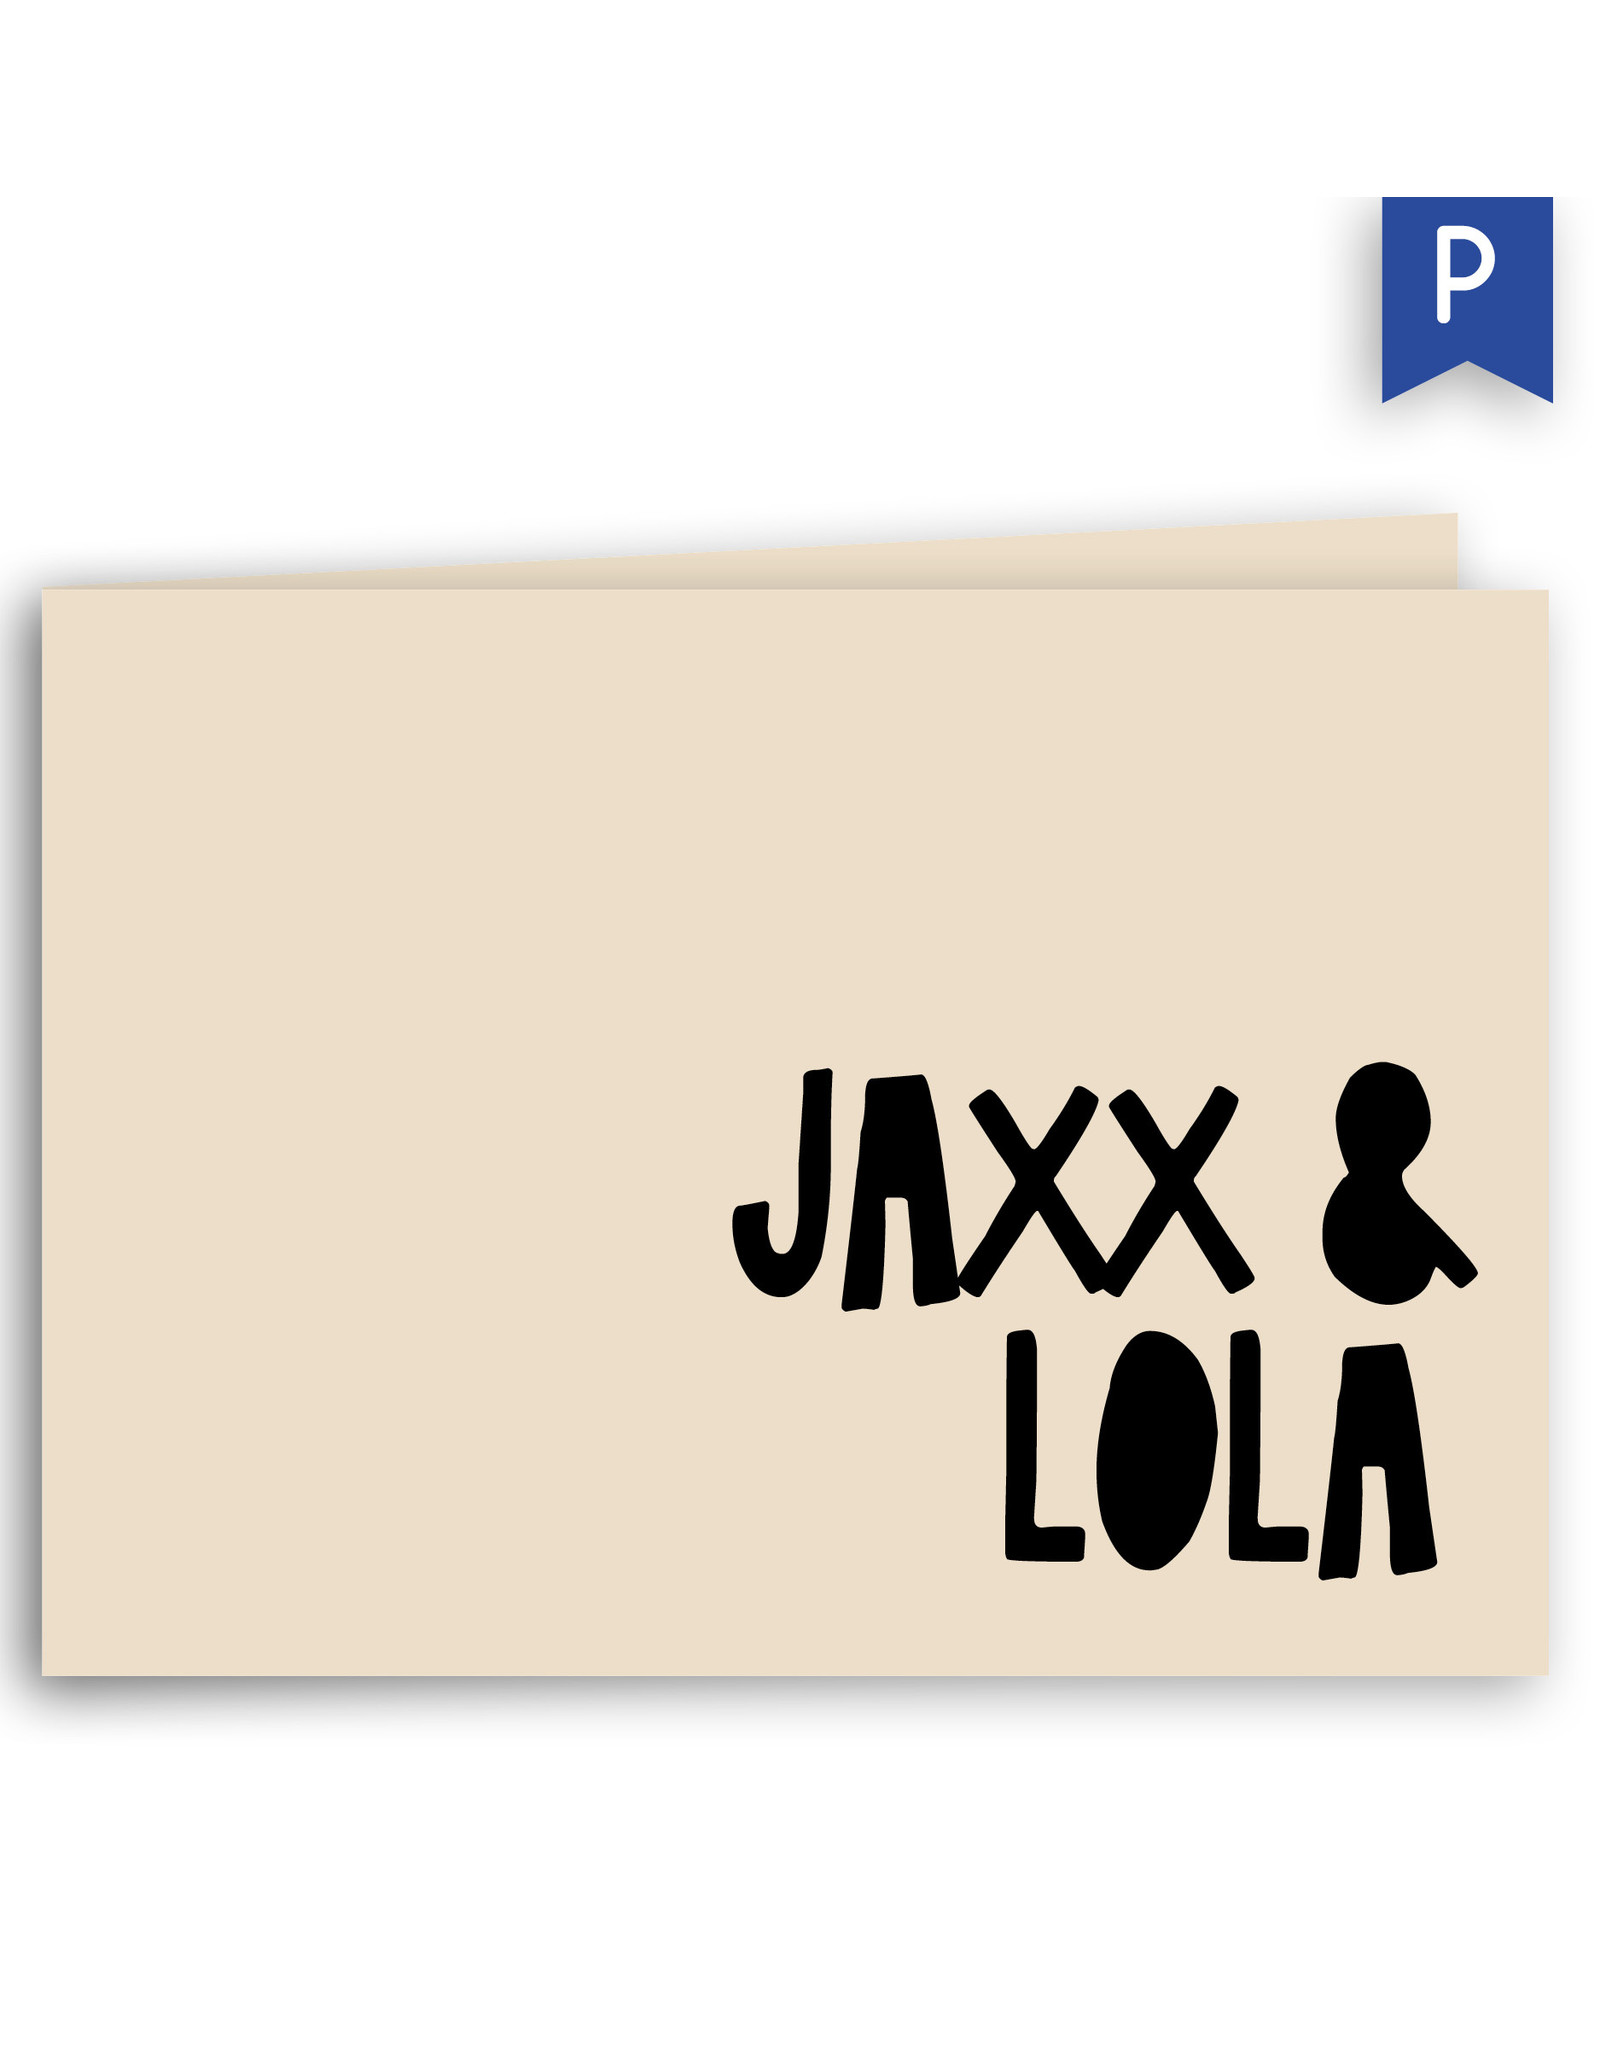 www.Robin.cards Trouwkaarten premium gevouwen rechthoek Jaxx en Lola